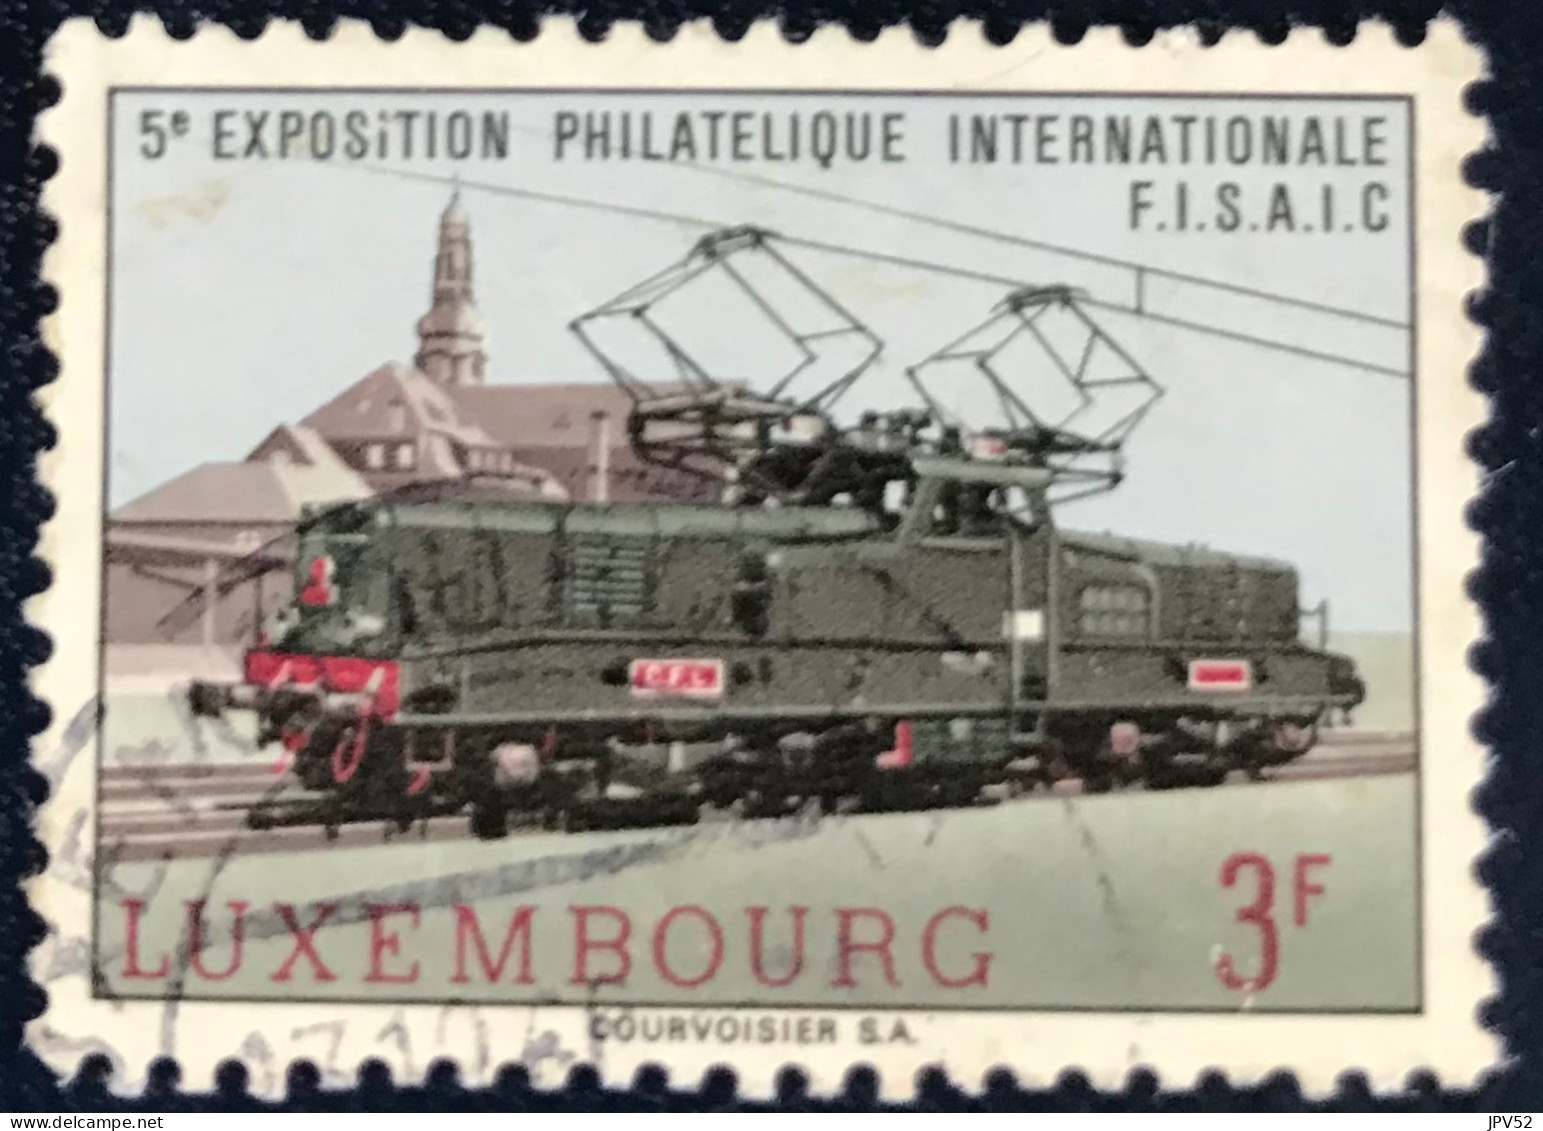 Luxembourg - Luxemburg - C18/34 - 1966 - (°)used - Michel 736 - Elektrische Locomotief - Usados